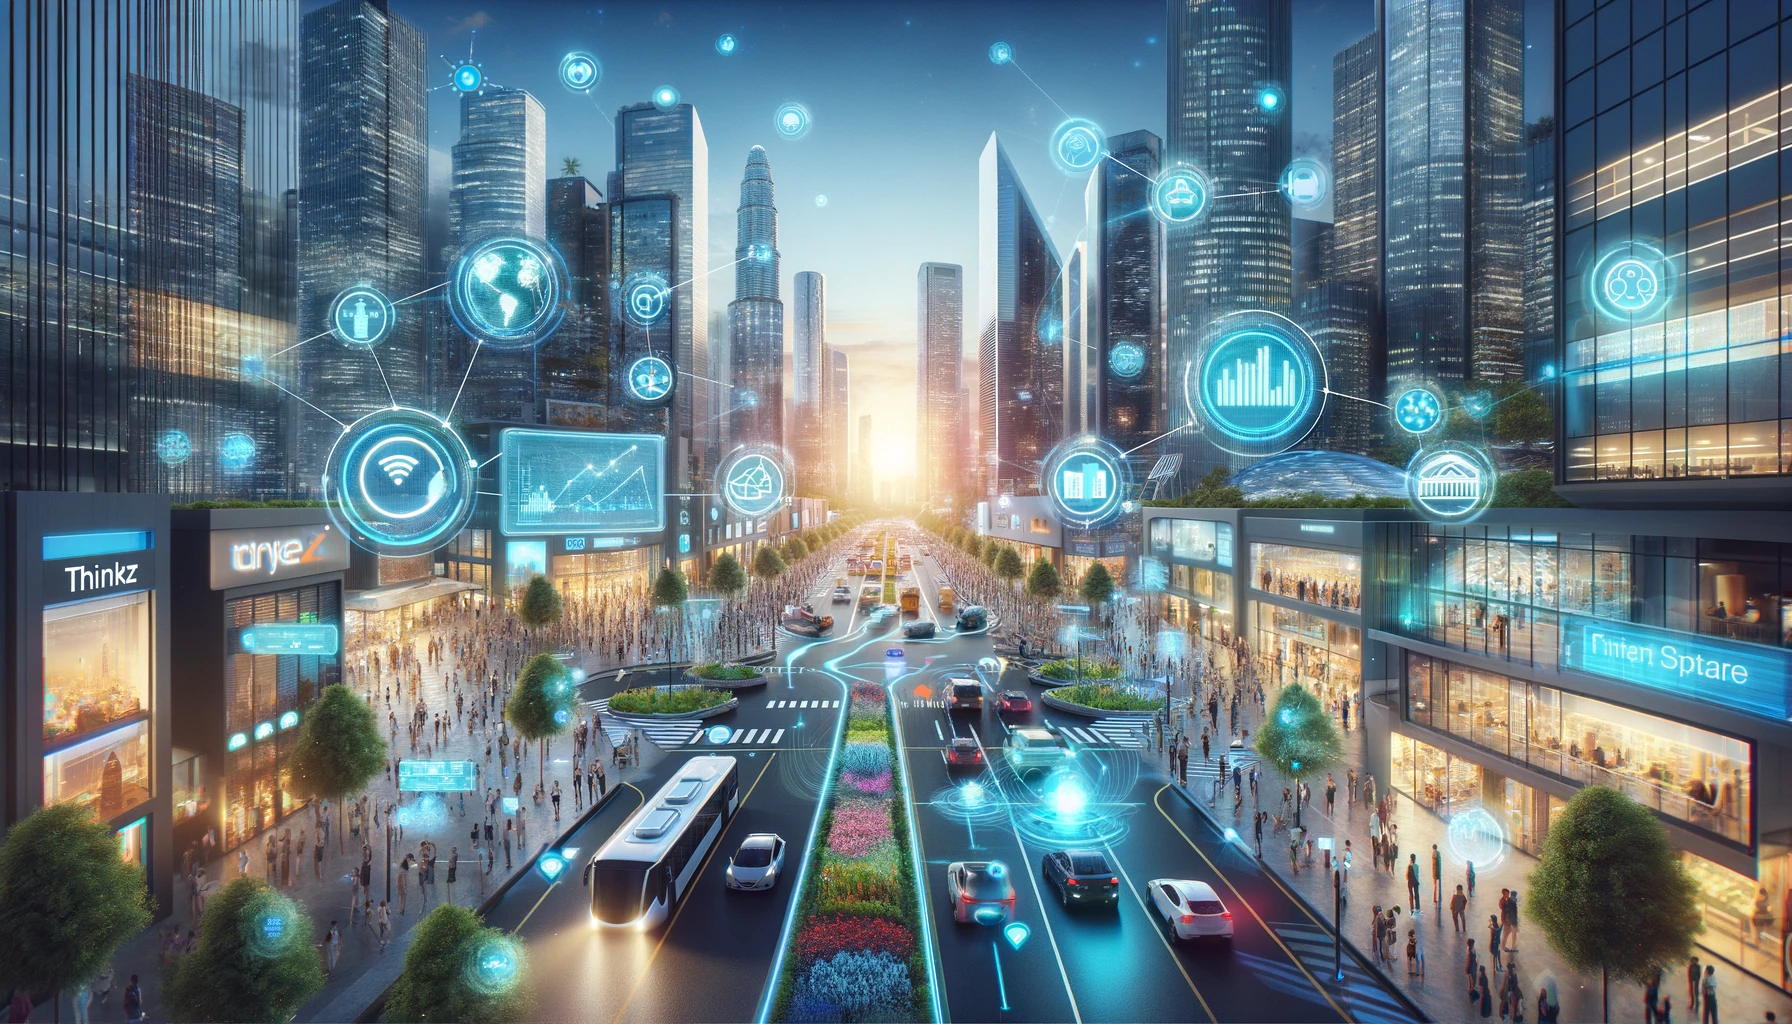 Thinkz-future-Cityscape-Iot-mobility-smart-city-local-business